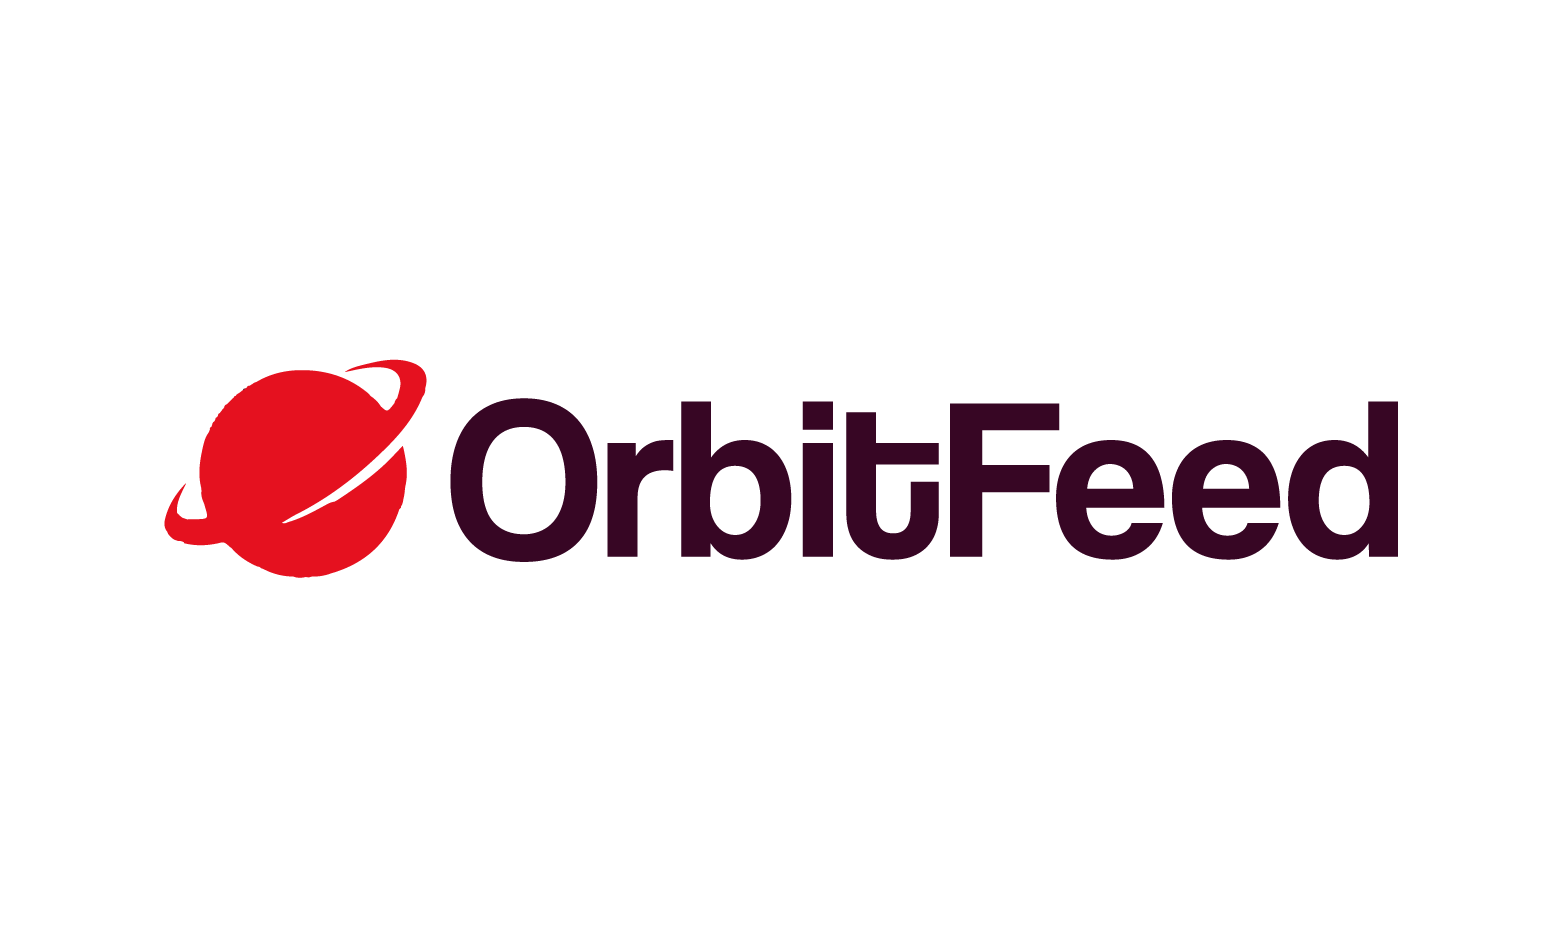 OrbitFeed.com - Creative brandable domain for sale